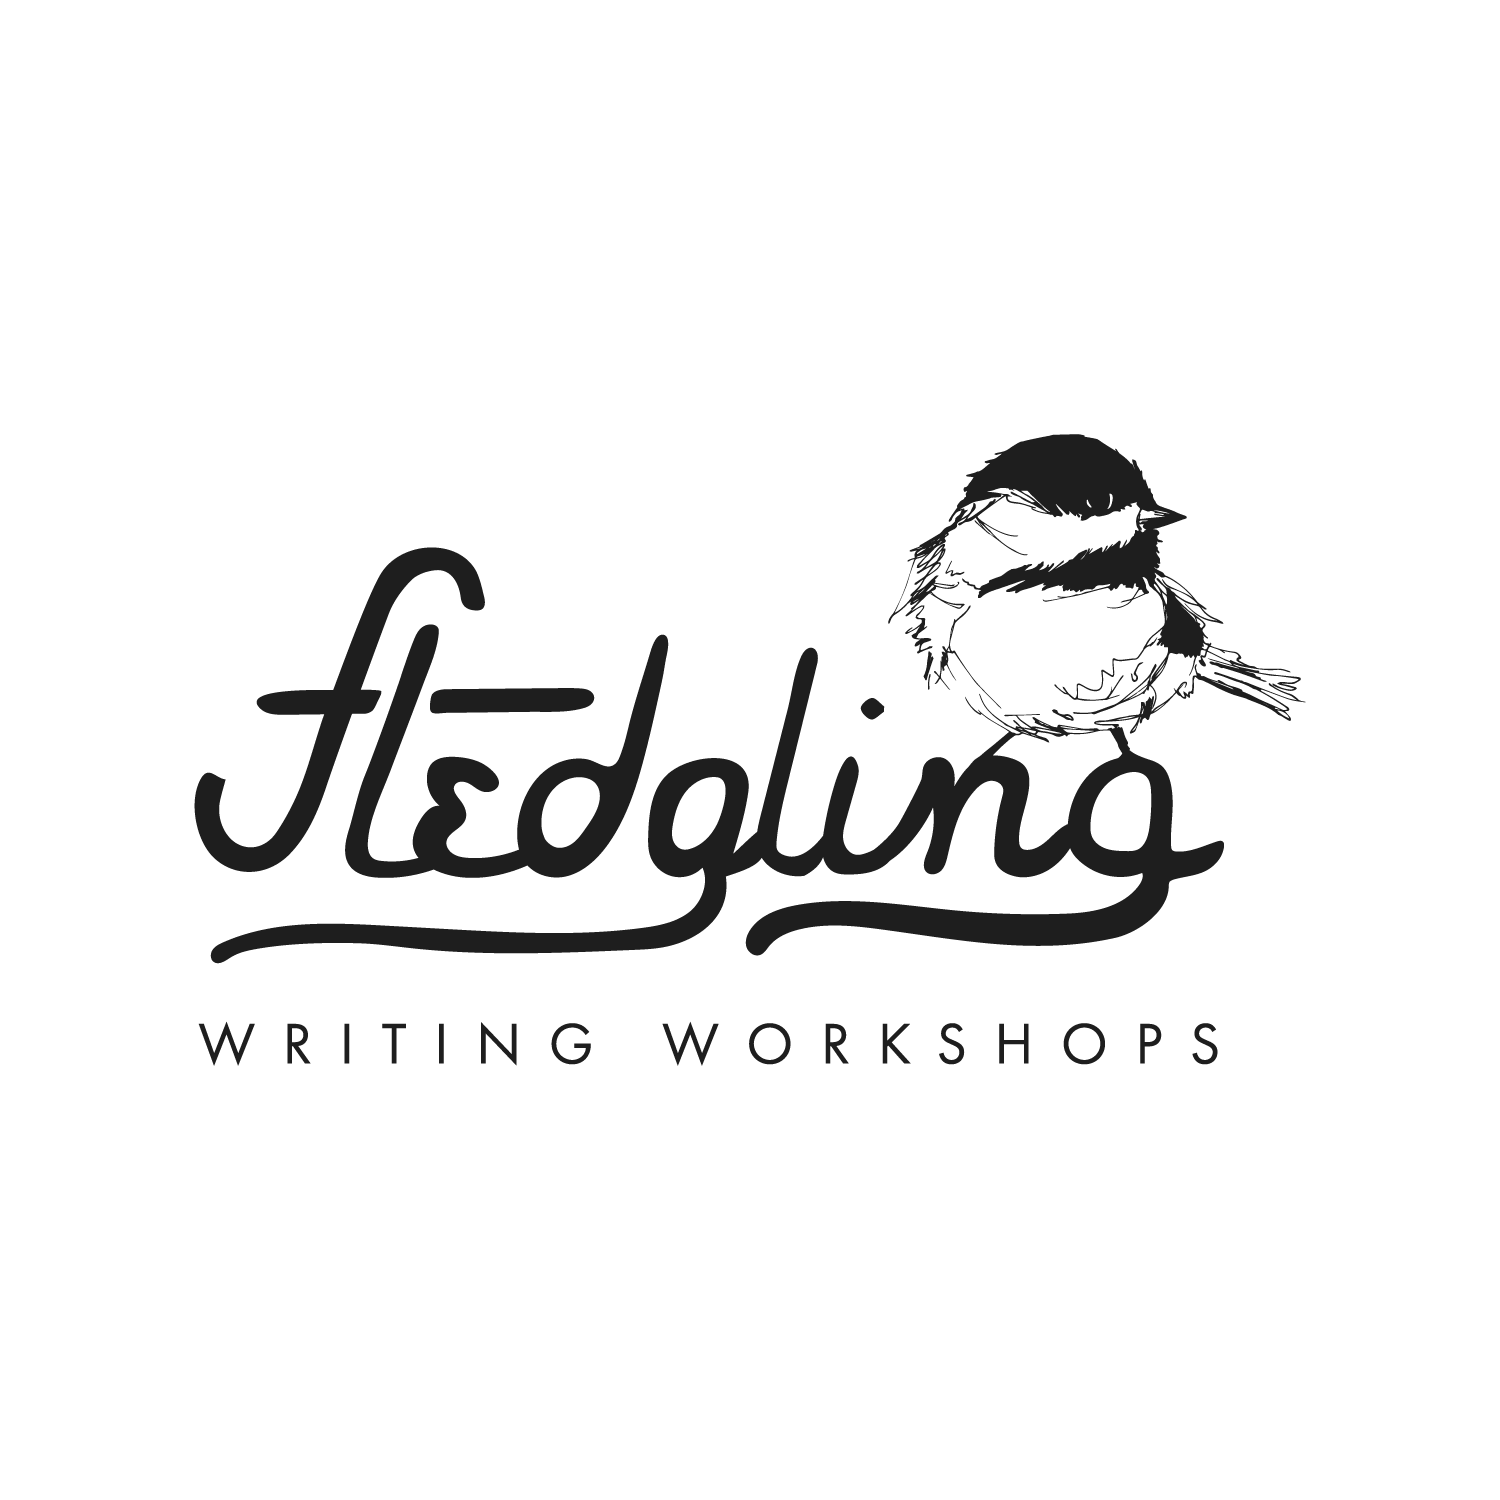 Fledgling Writing Workshops